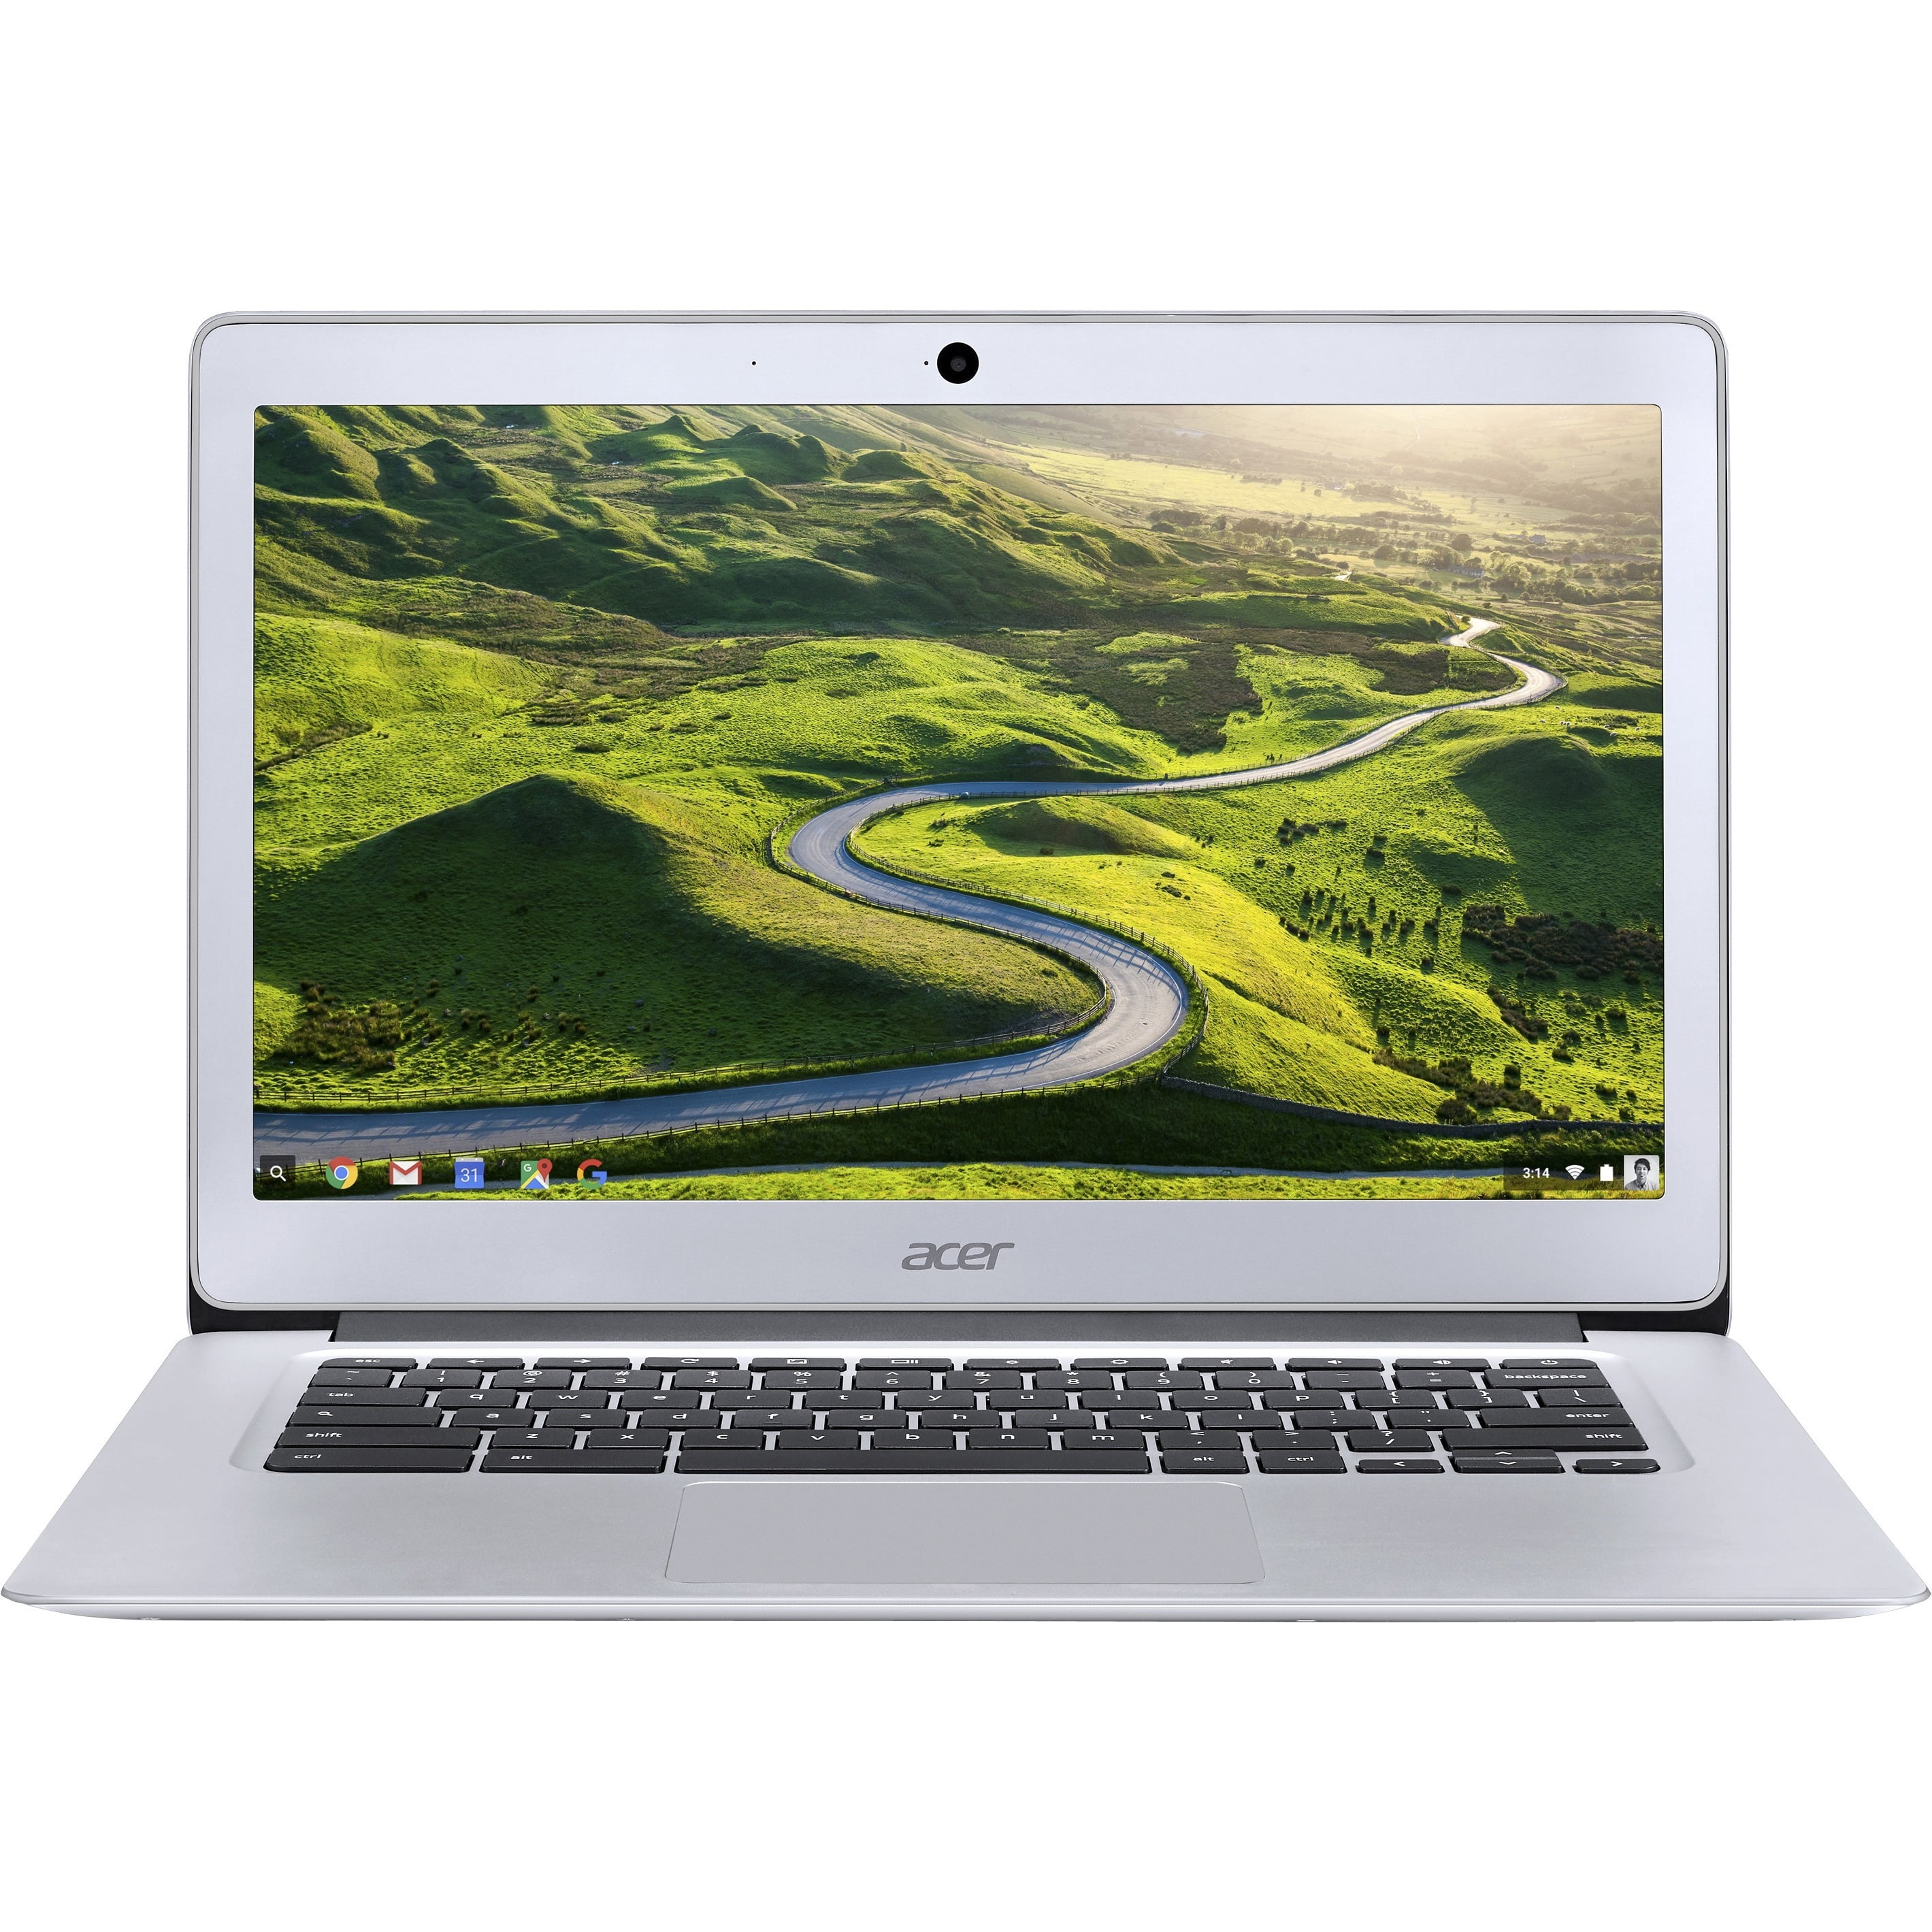 bereiken Afsnijden Oh jee Acer Chromebook 14 CB3-431-C7EX - Intel Celeron N3160 / 1.6 GHz - Chrome OS  - HD Graphics 400 - 4 GB RAM - 32 GB eMMC - 14" IPS 1920 x 1080 (Full HD) -  Wi-Fi 5 - steel gray - kbd: US - Walmart.com